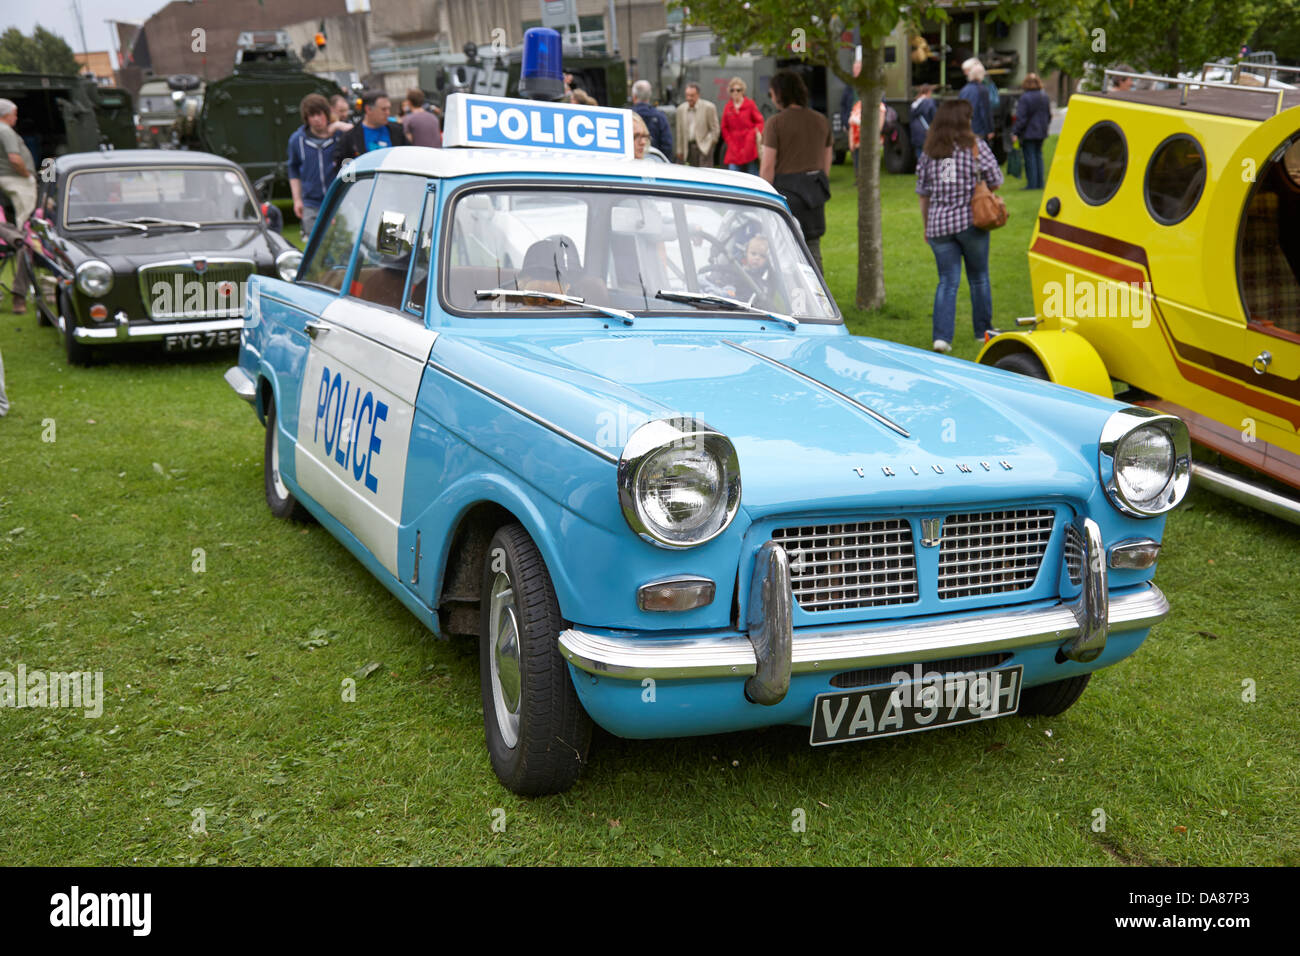 vintage-triumph-herald-police-car-at-a-c